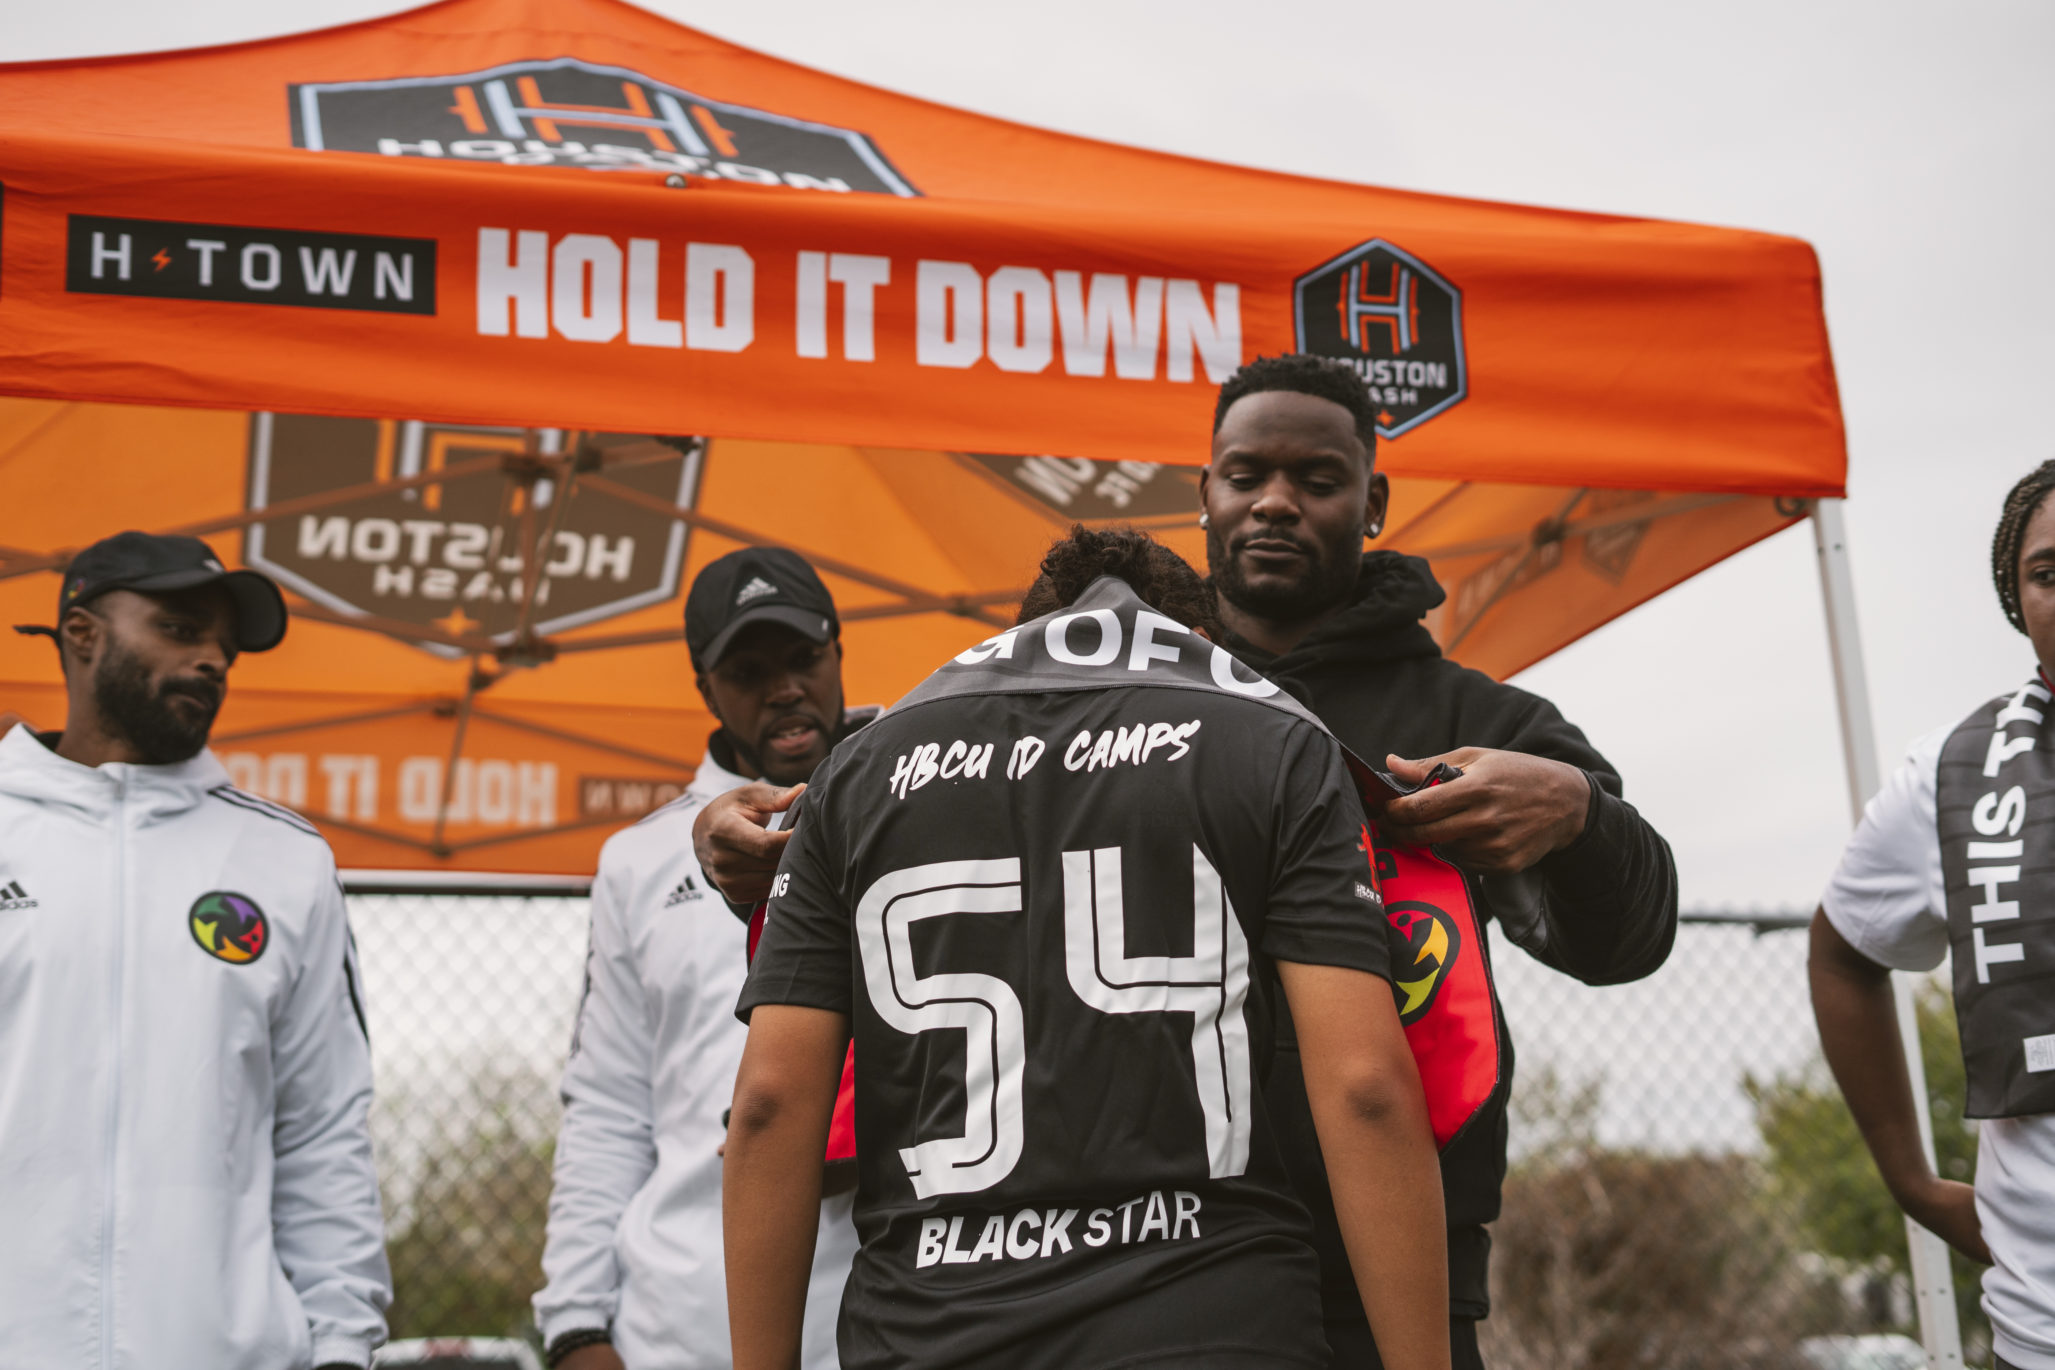 Mo Edu puts scarf on Black Star player at Houston HBCU event